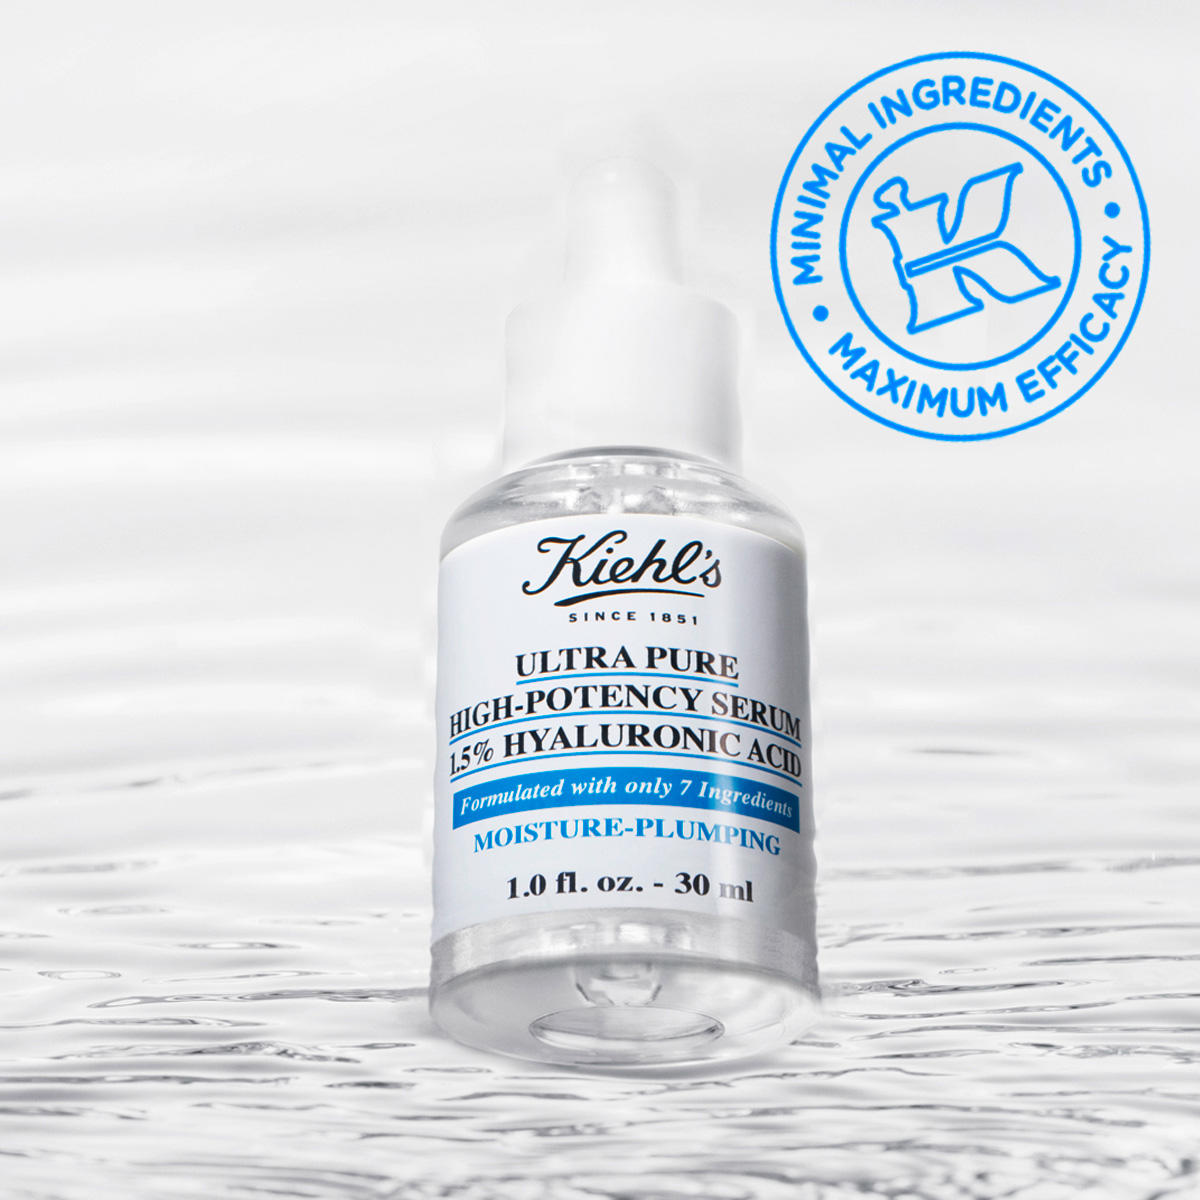 Kiehl's Ultra Pure High-Potency Serum 1.5% Hyaluronic Acid 30 ml - 5